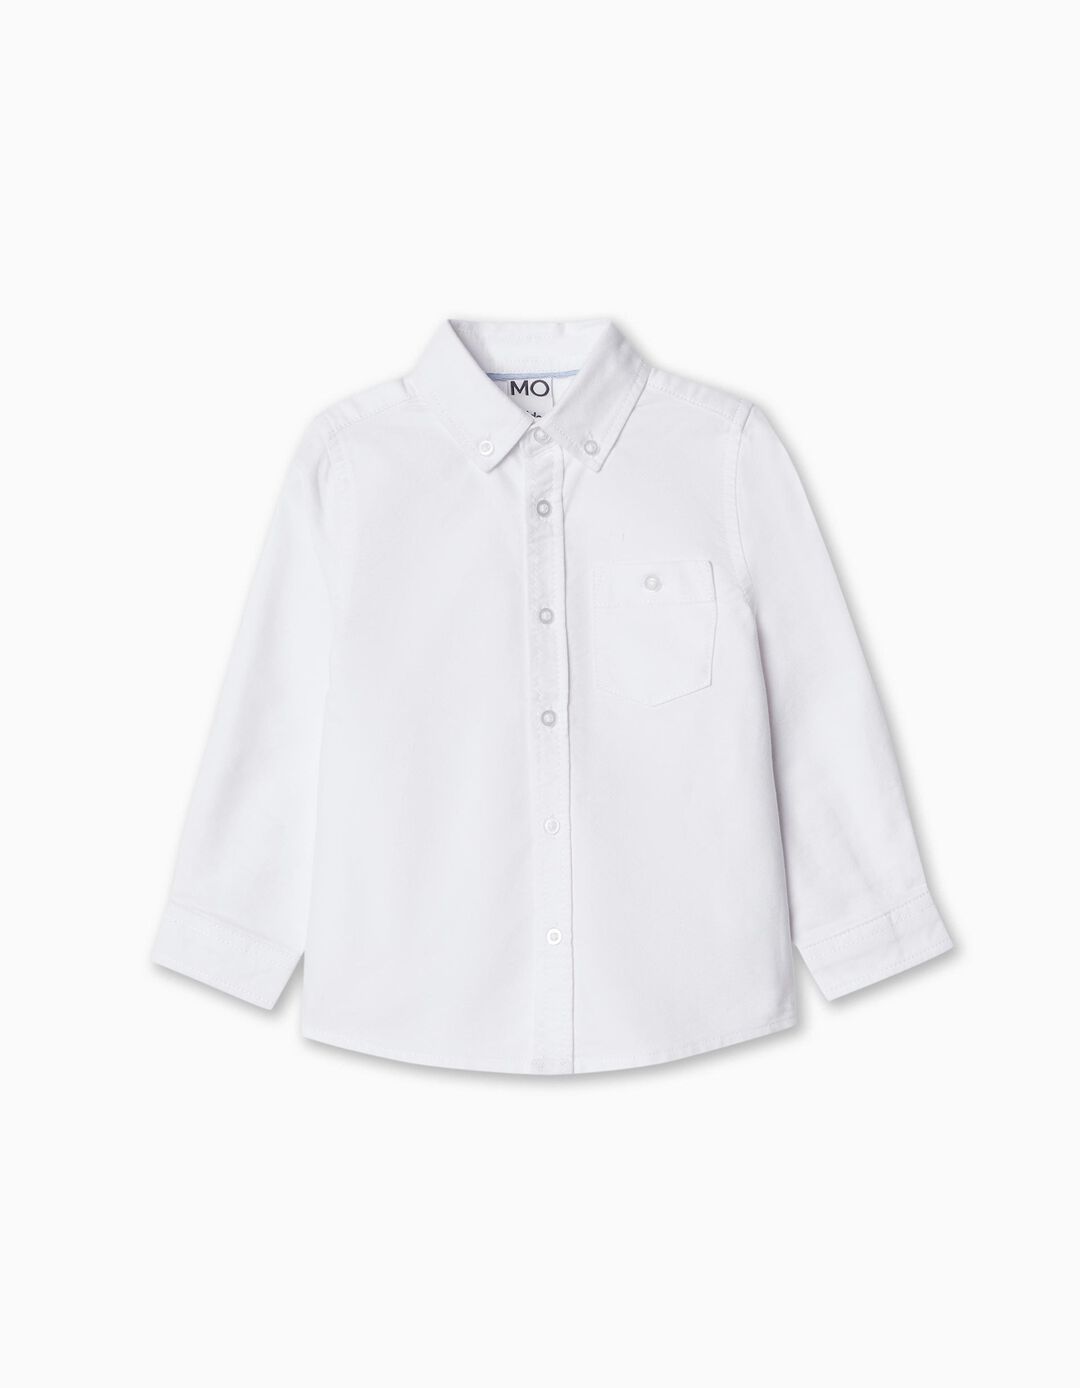 Oxford Long Sleeve Shirt, Baby Boy, White